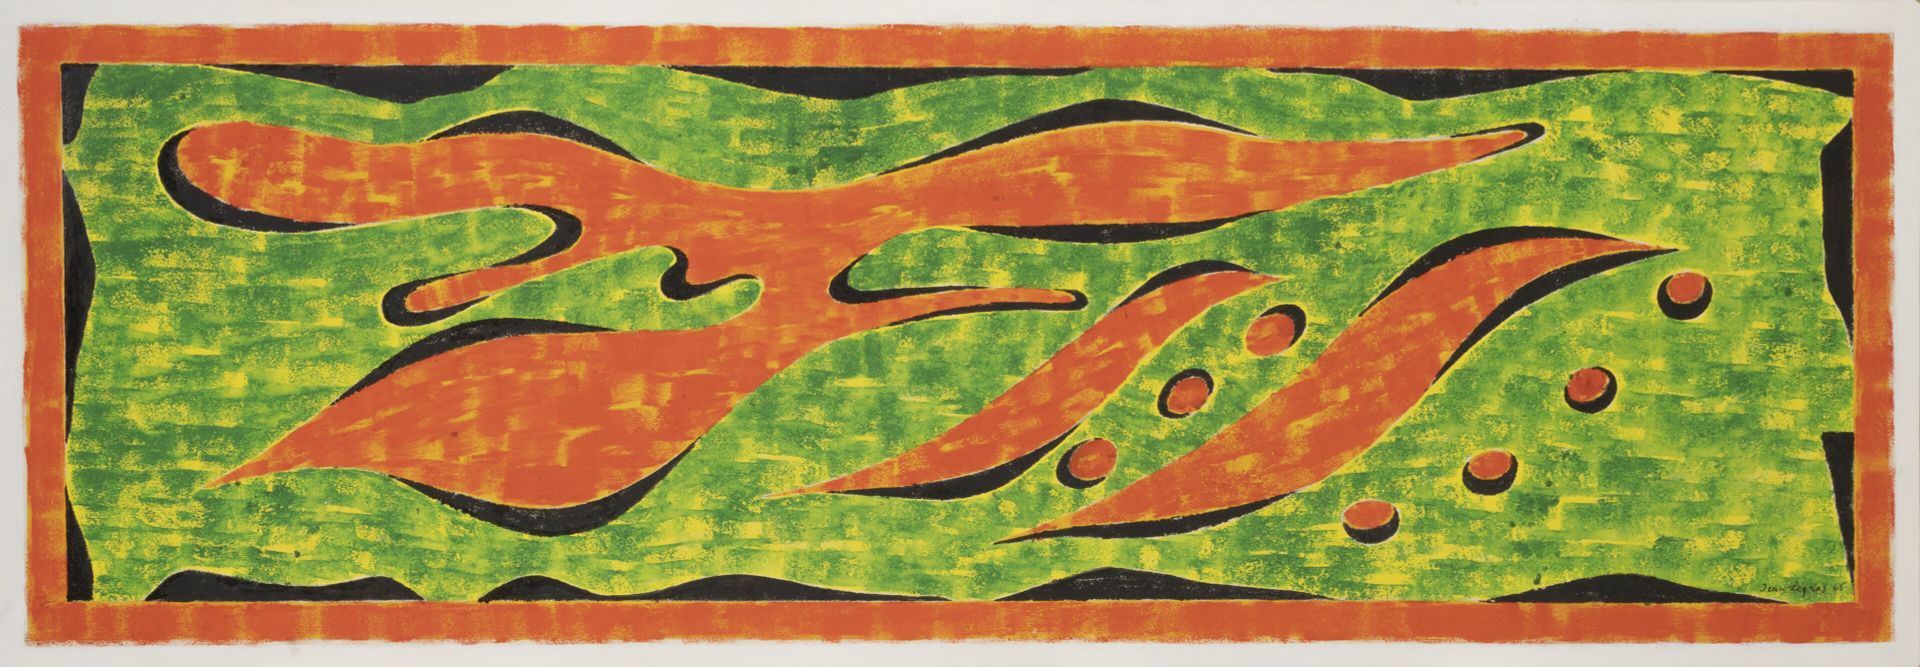 Jean LEGROS (1917-1981) 无题》，1965年。
异型油彩。
右下方有签名和日期。
55,5 x 158,5厘米。
边缘有小污点、小擦伤和小&hellip;